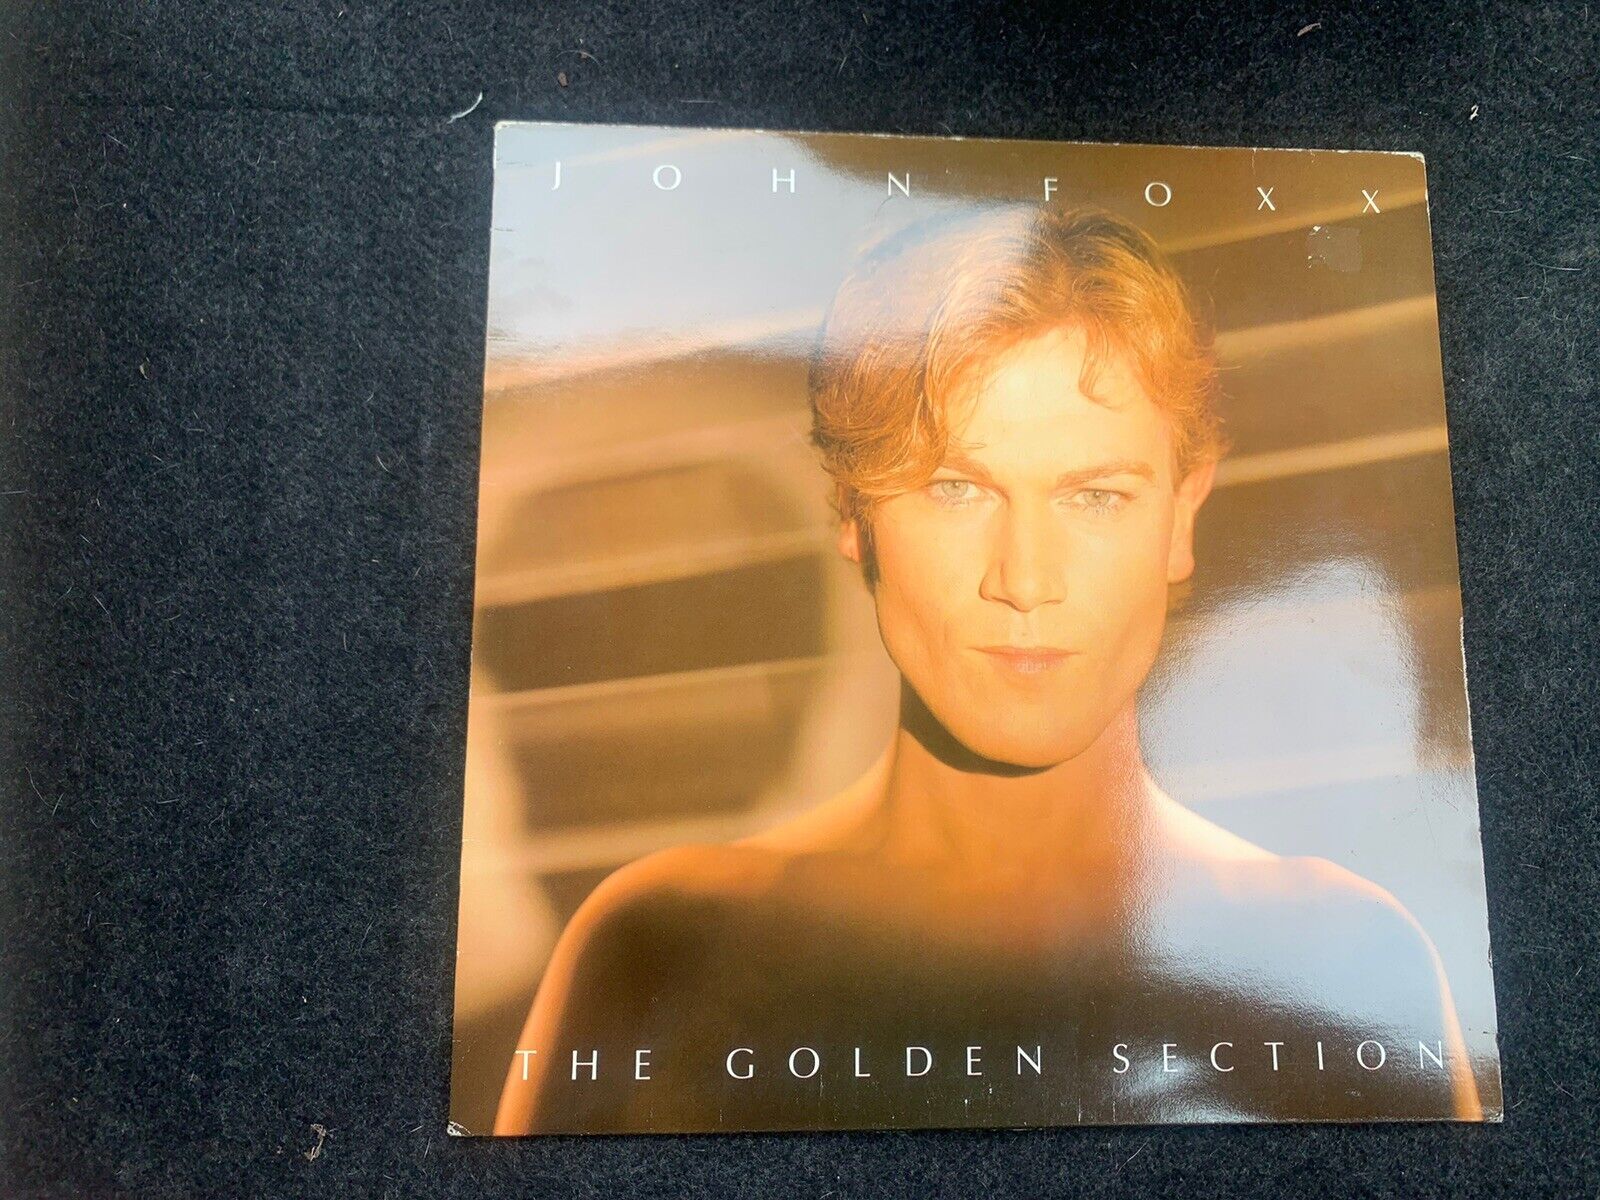 John Foxx-The Golden Section-Ultravox-1983-Record-Album-Vinyl-LP Vg+